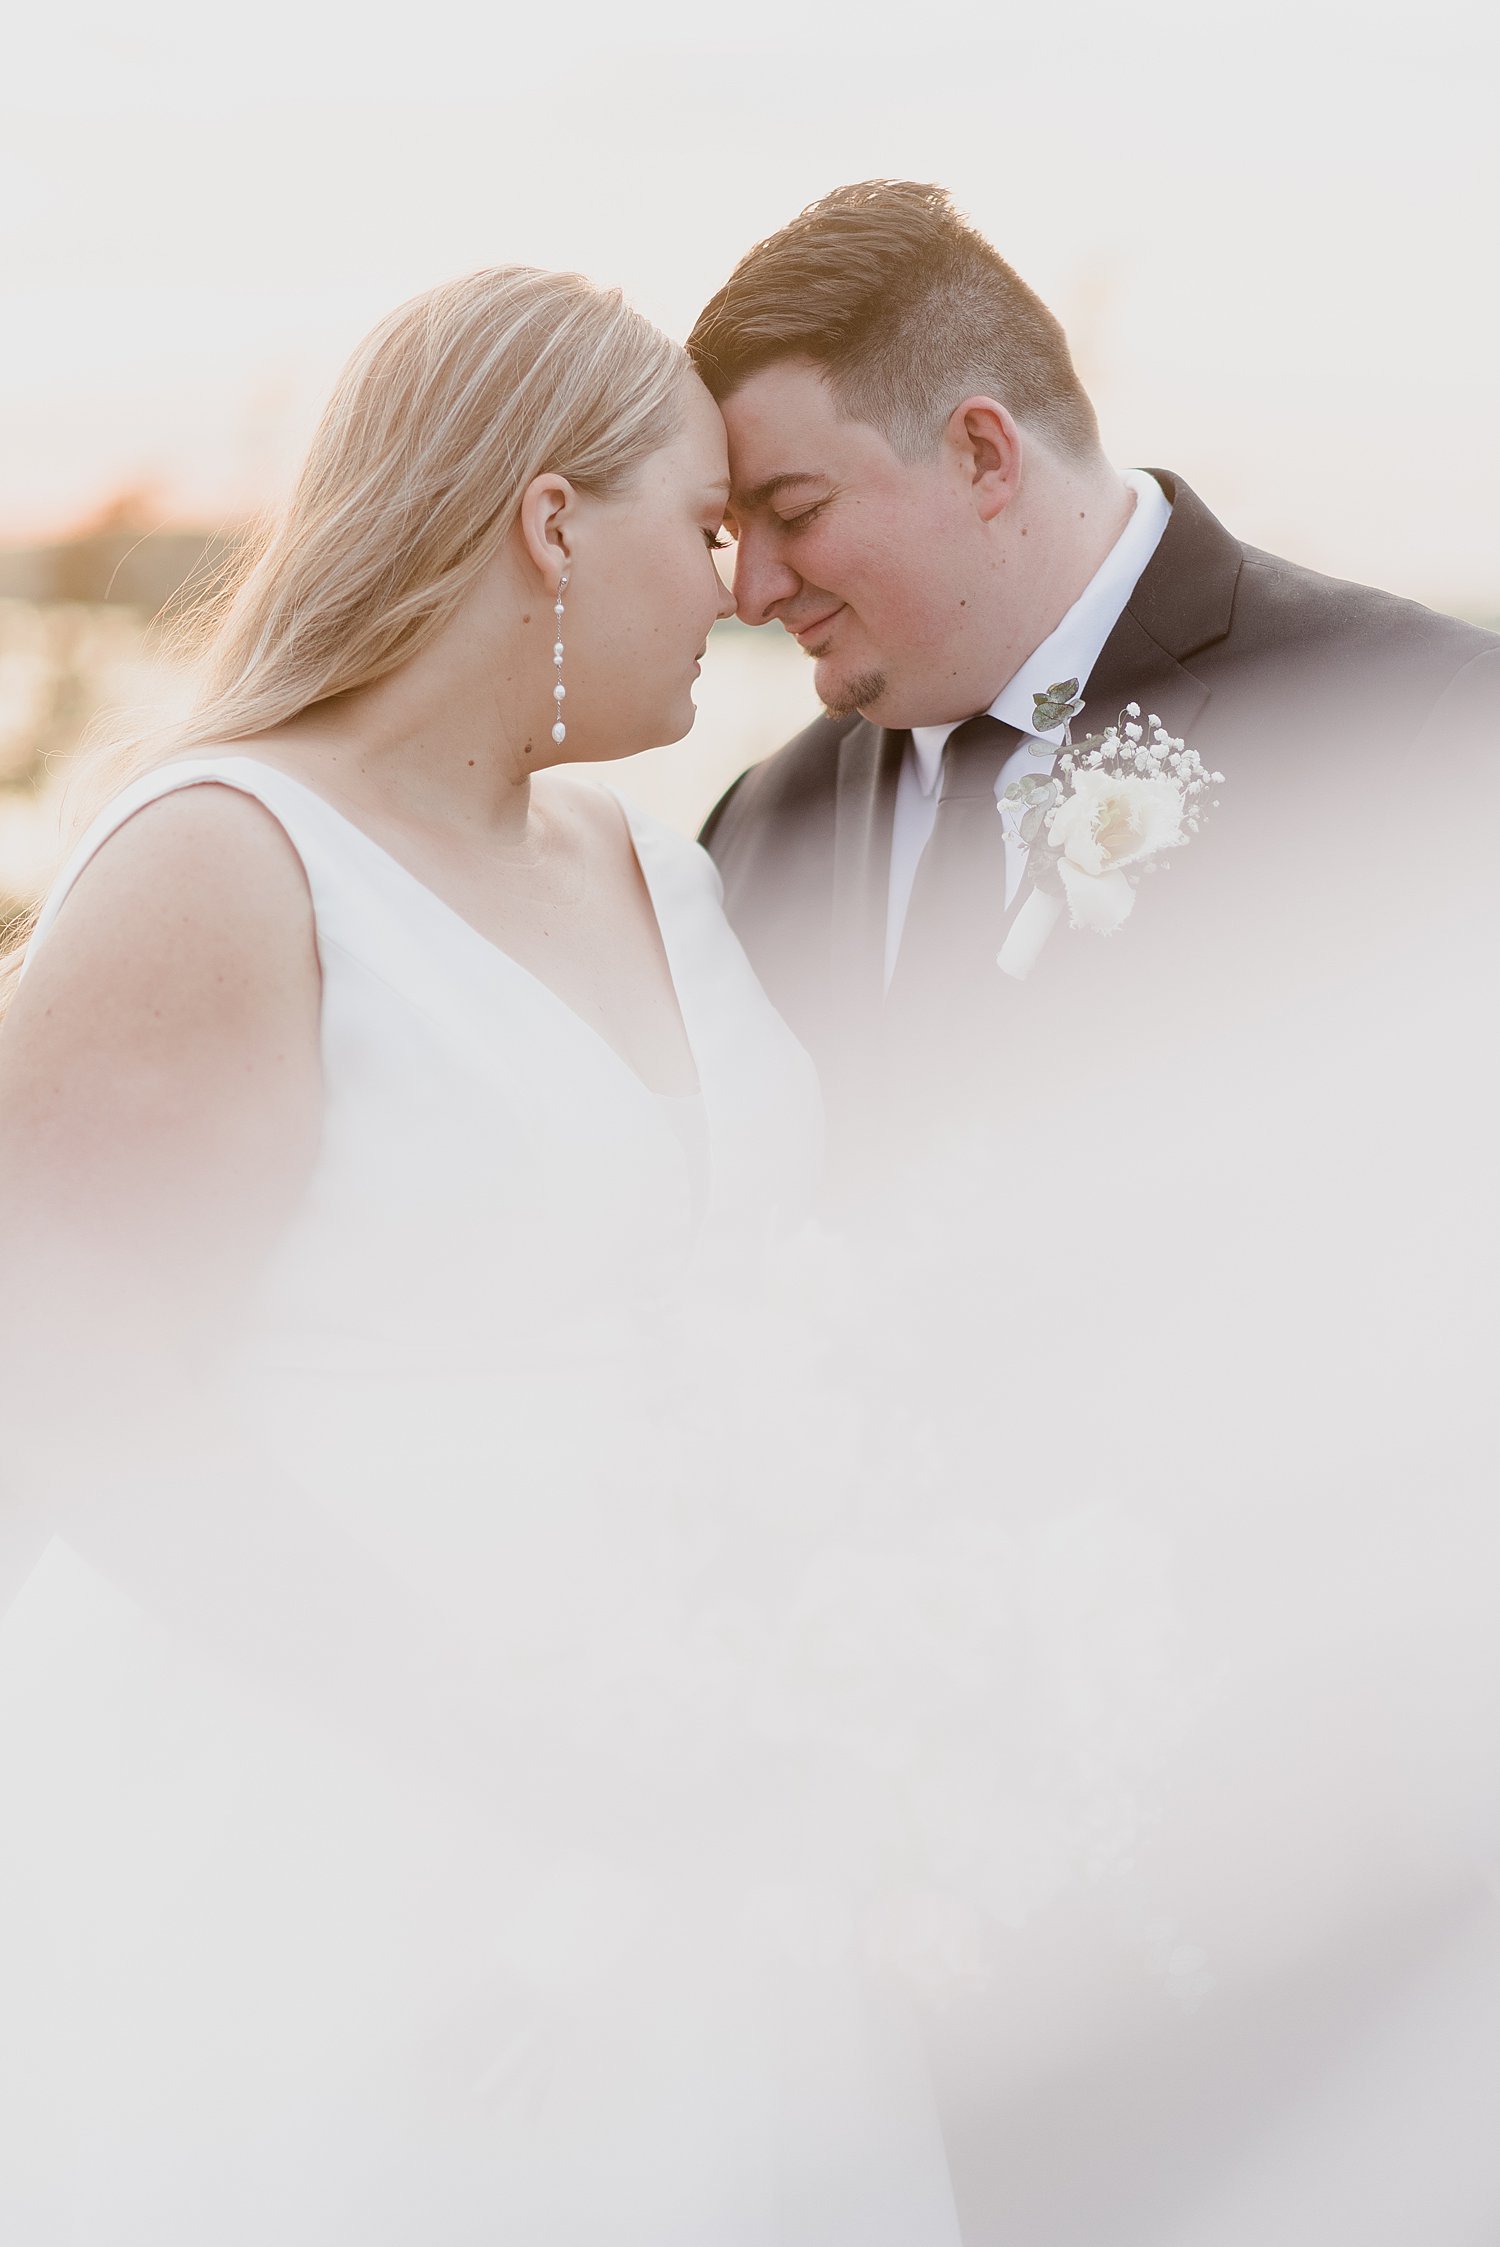 Intimate PEC Micro Wedding | Prince Edward County Wedding Photographer | Holly McMurter Photographs_0125.jpg